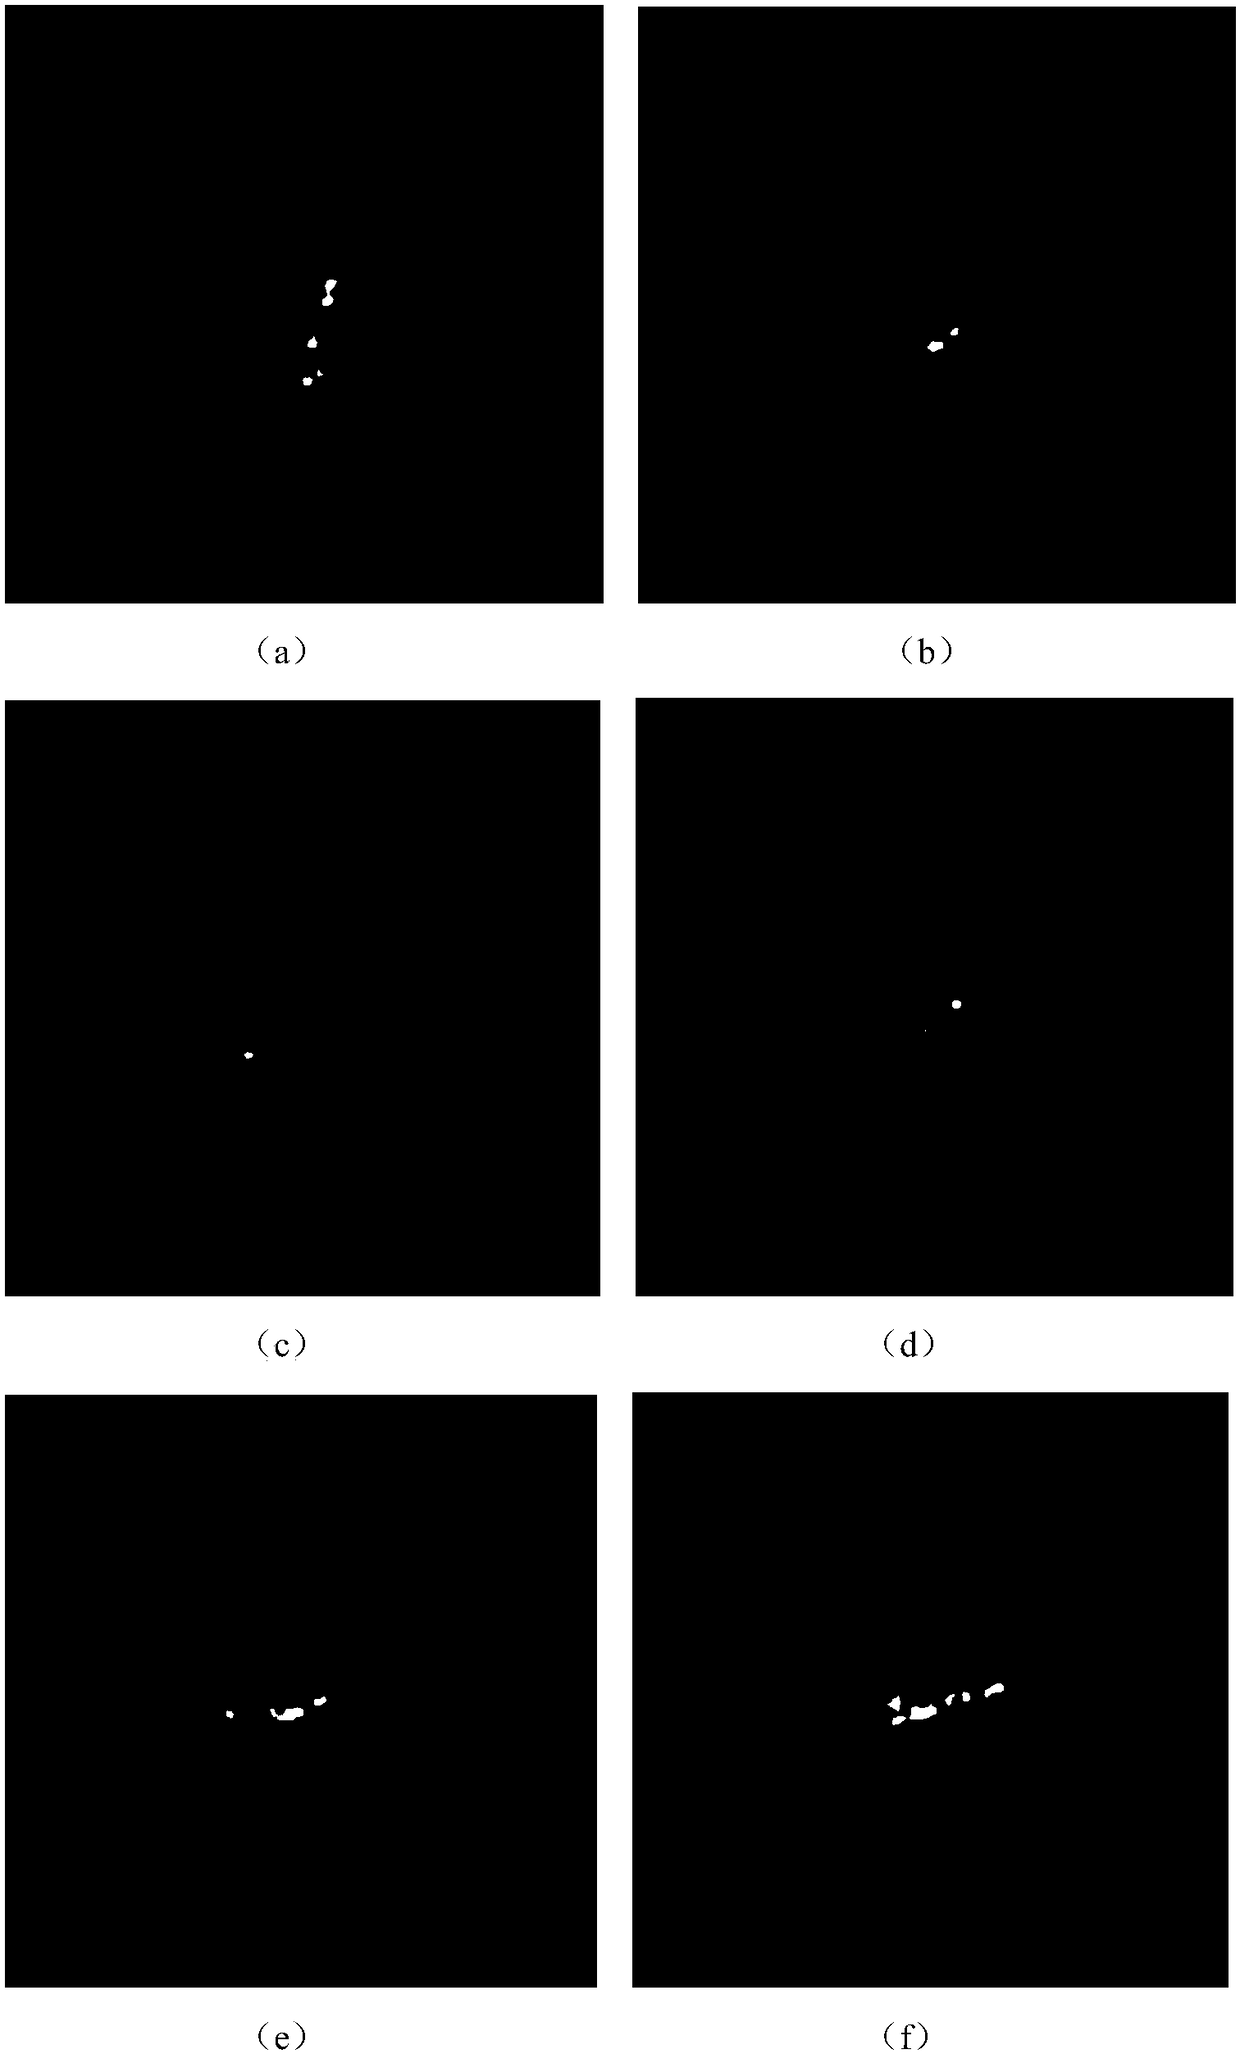 SAR image classification method based on improved pcanet